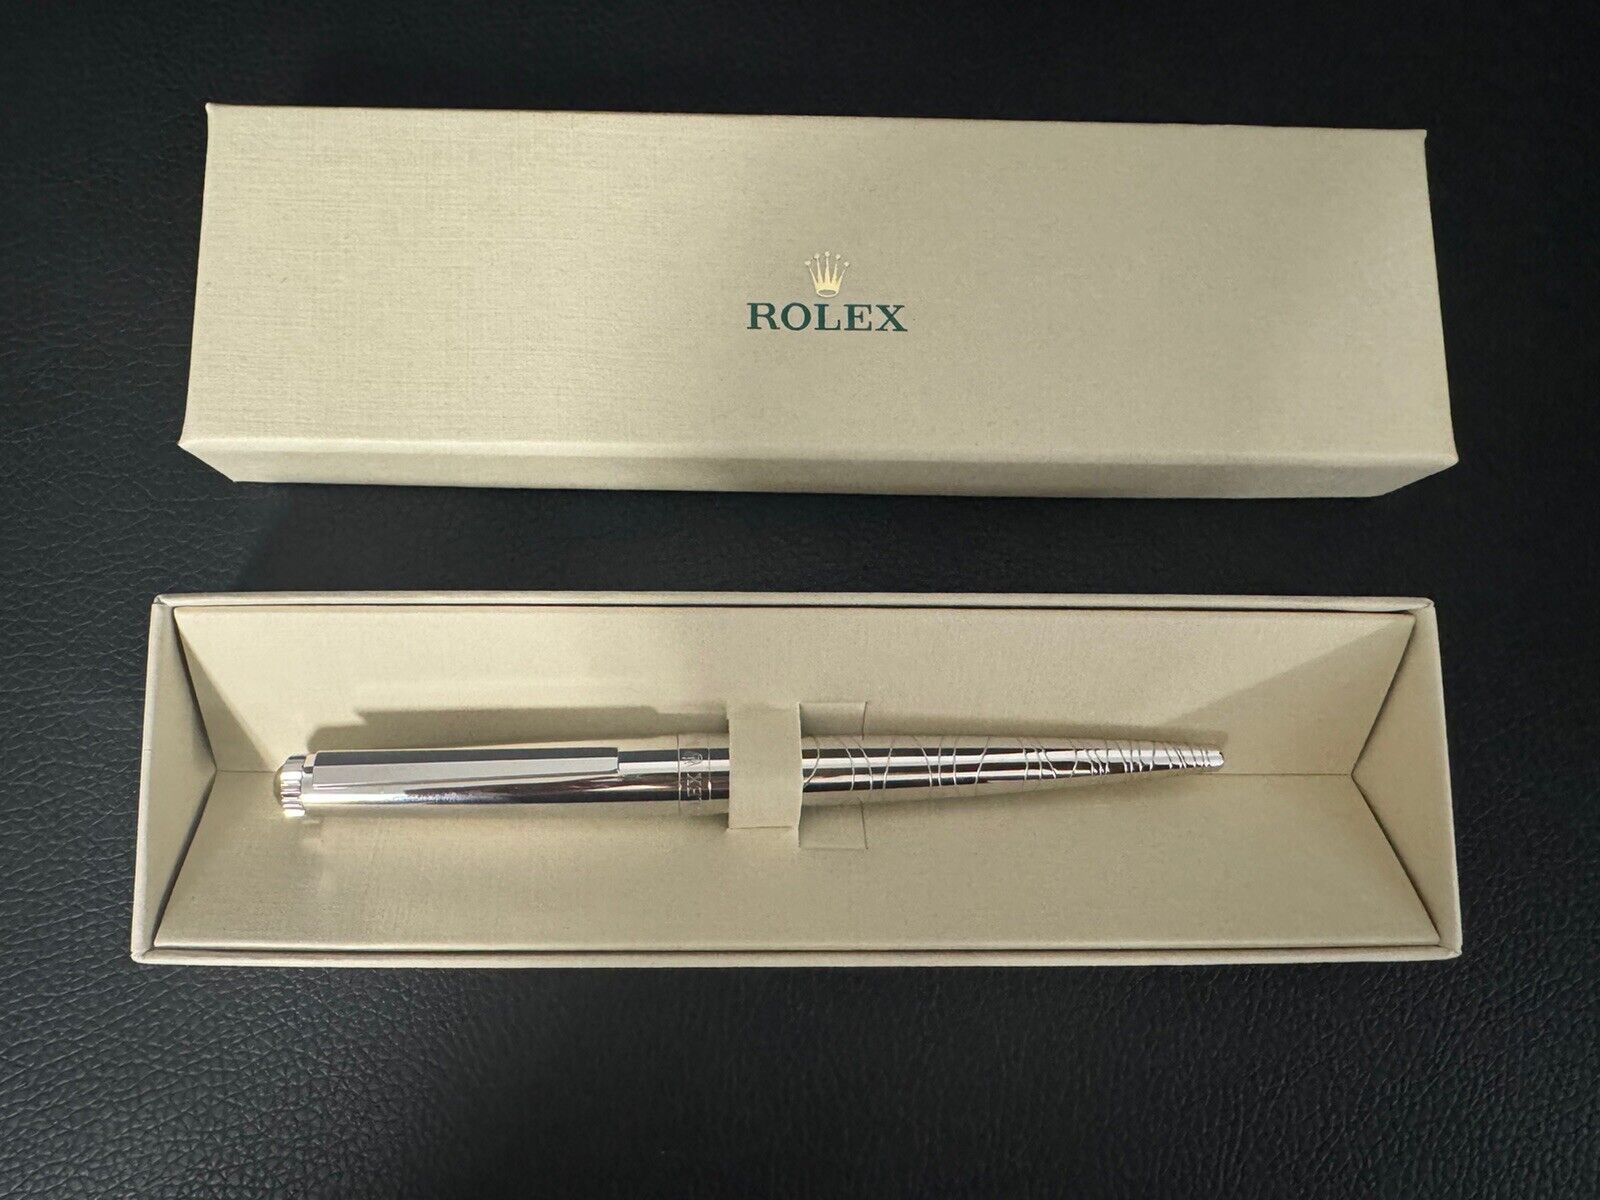 NEW Authentic Rolex Ballpoint Pen Rare Silver Platinum Finish WAVE PATTERN